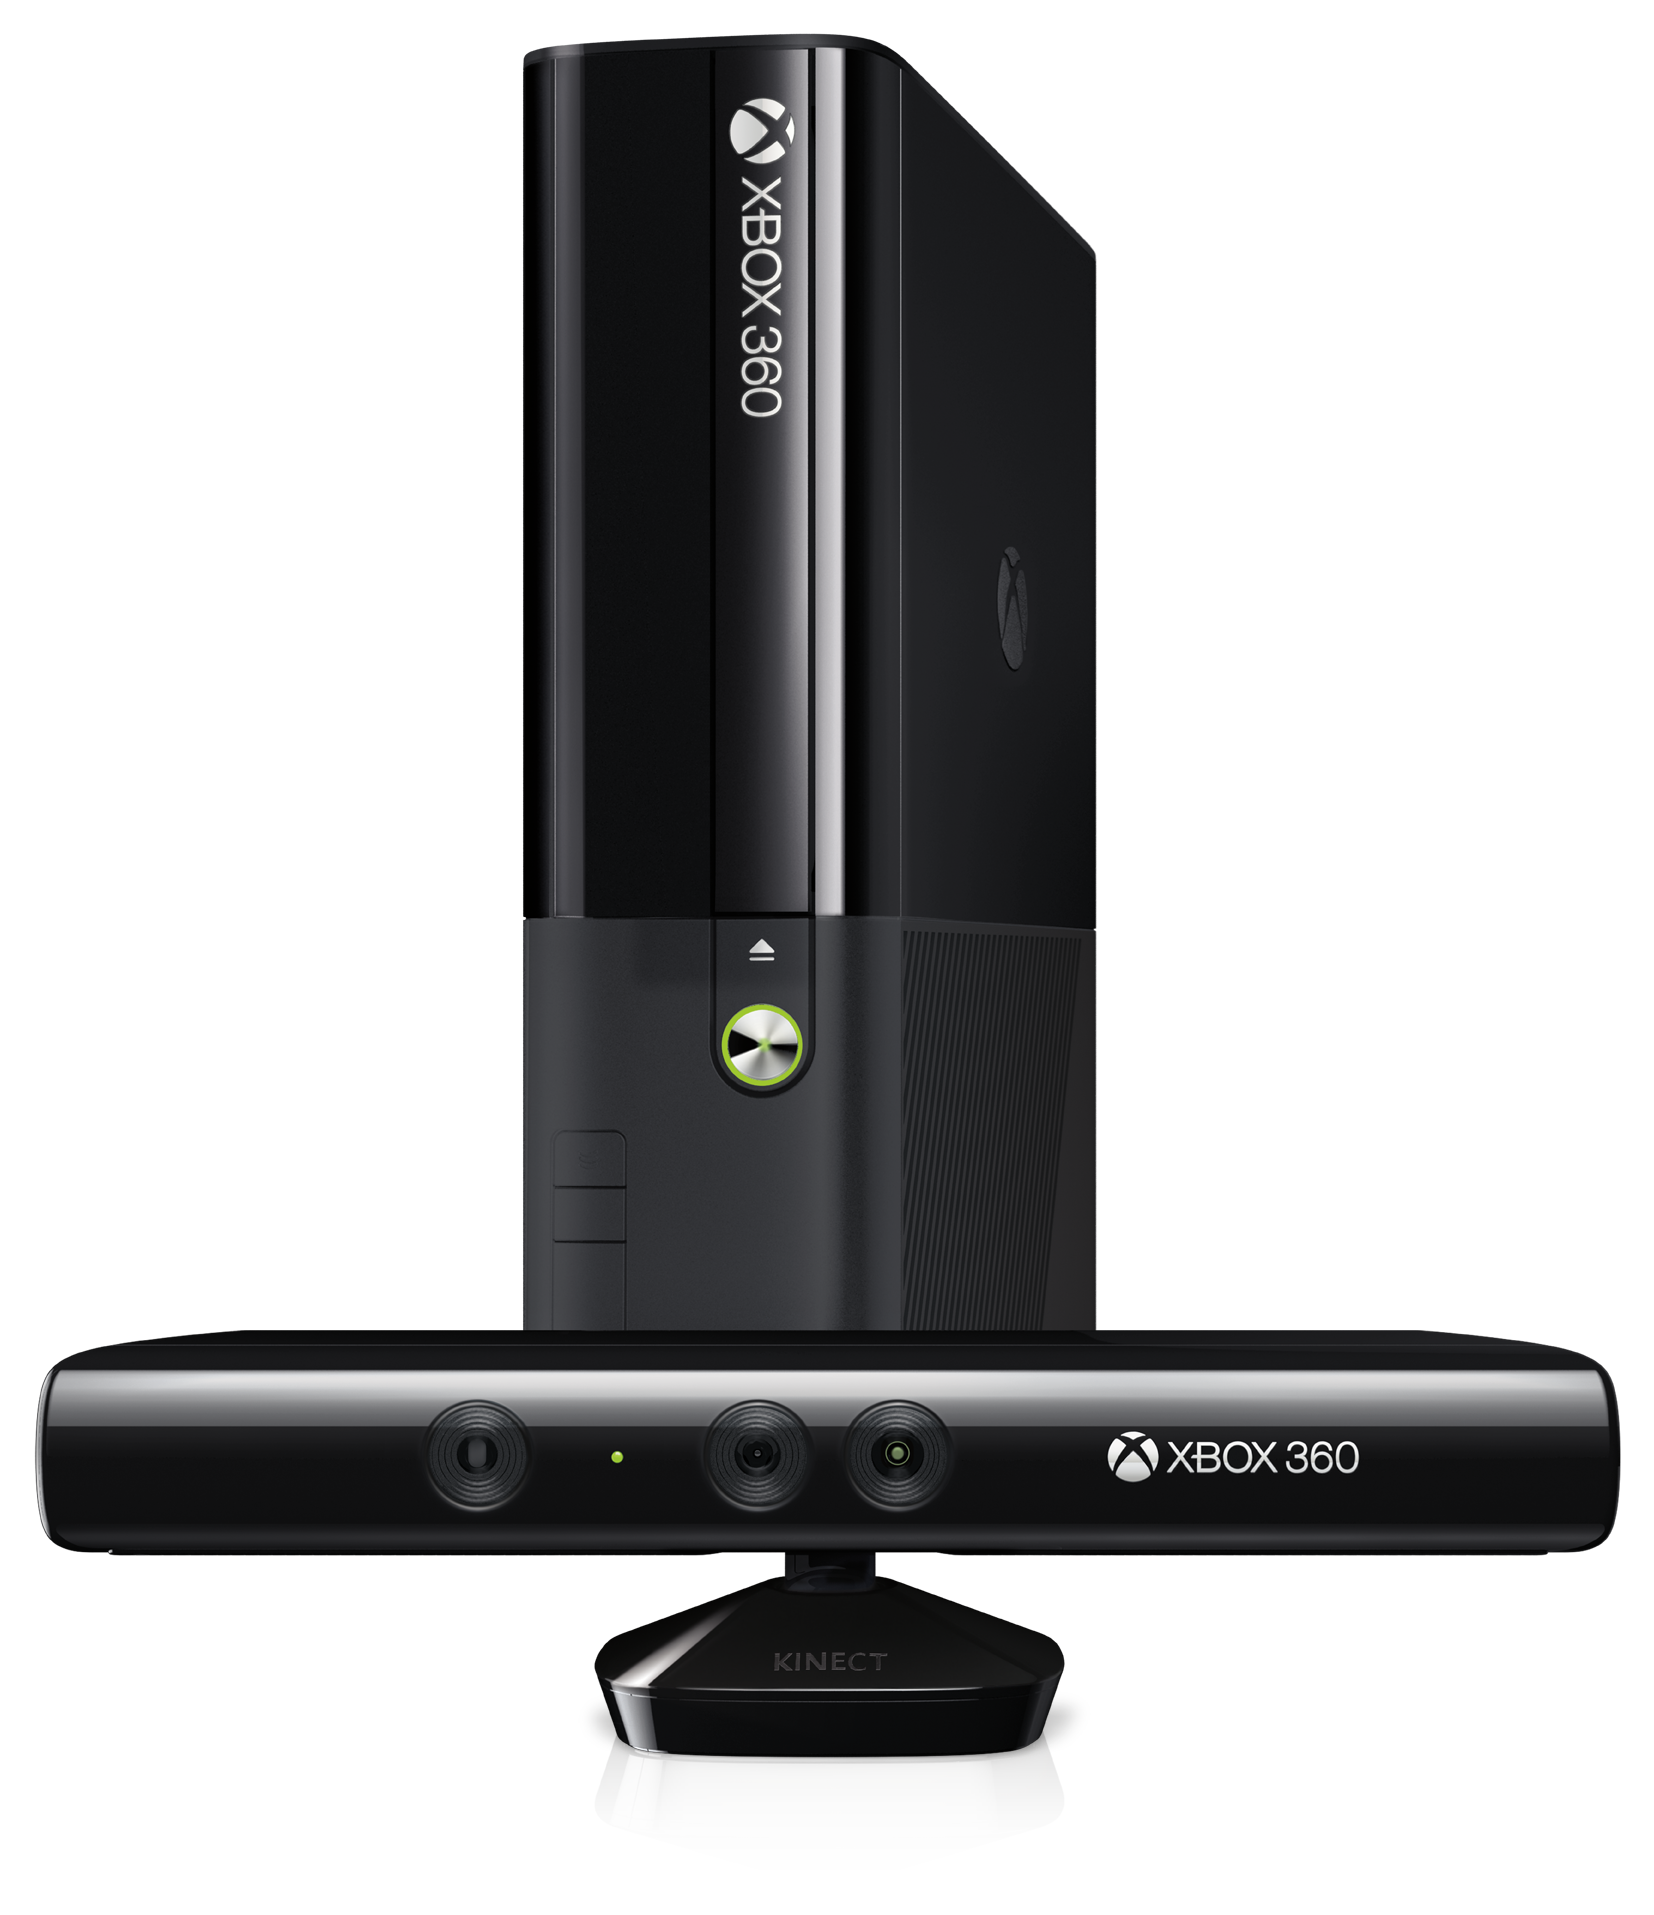 Microsoft Announces New Xbox 360 w/ Xbox One Design | WP7 ...